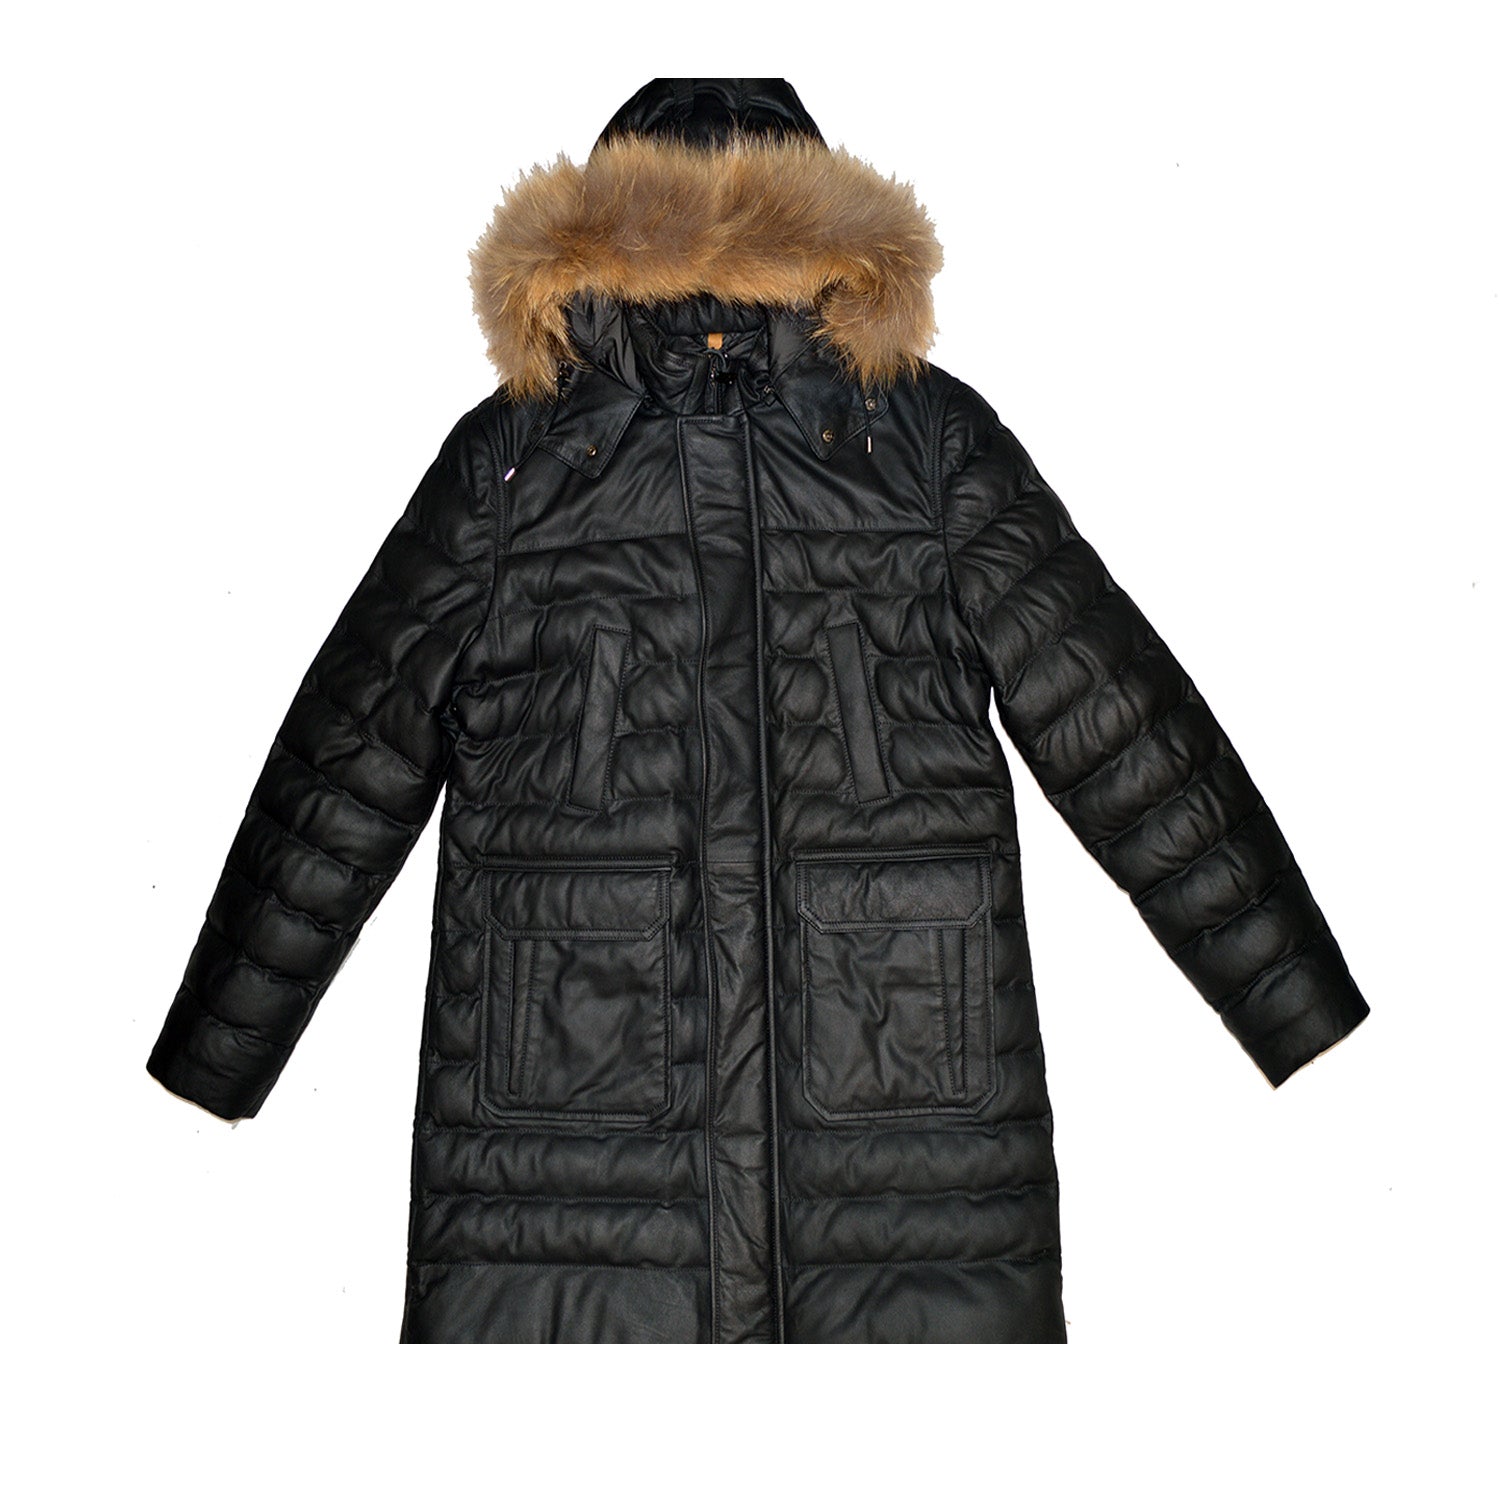 Torras Black Leather Long Coat